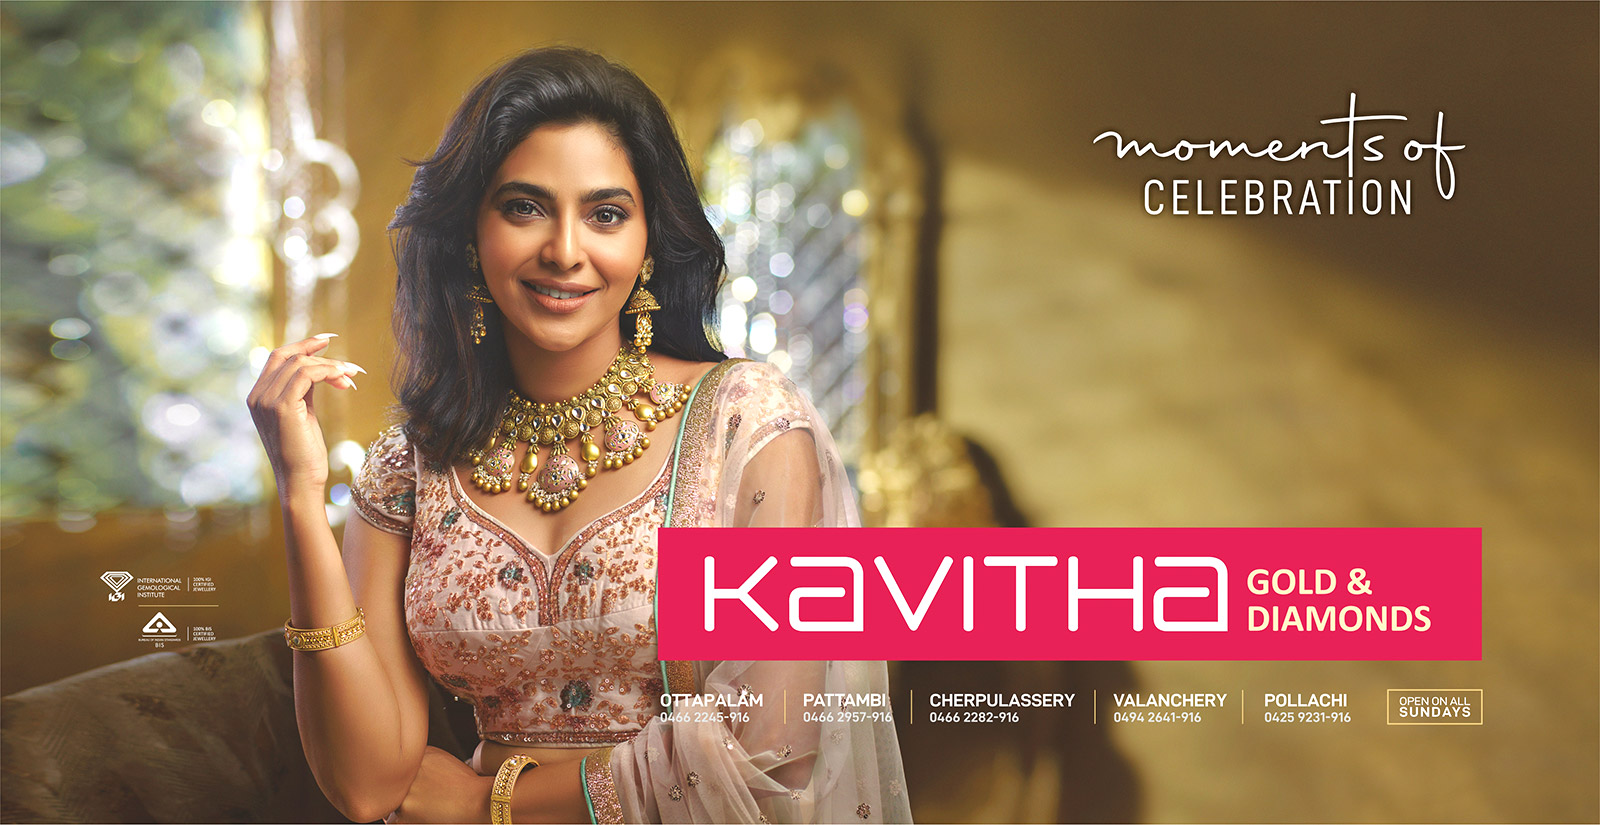 Aiswarya Lekshmi - Kavitha Gold & Diamonds Moments of Celebration